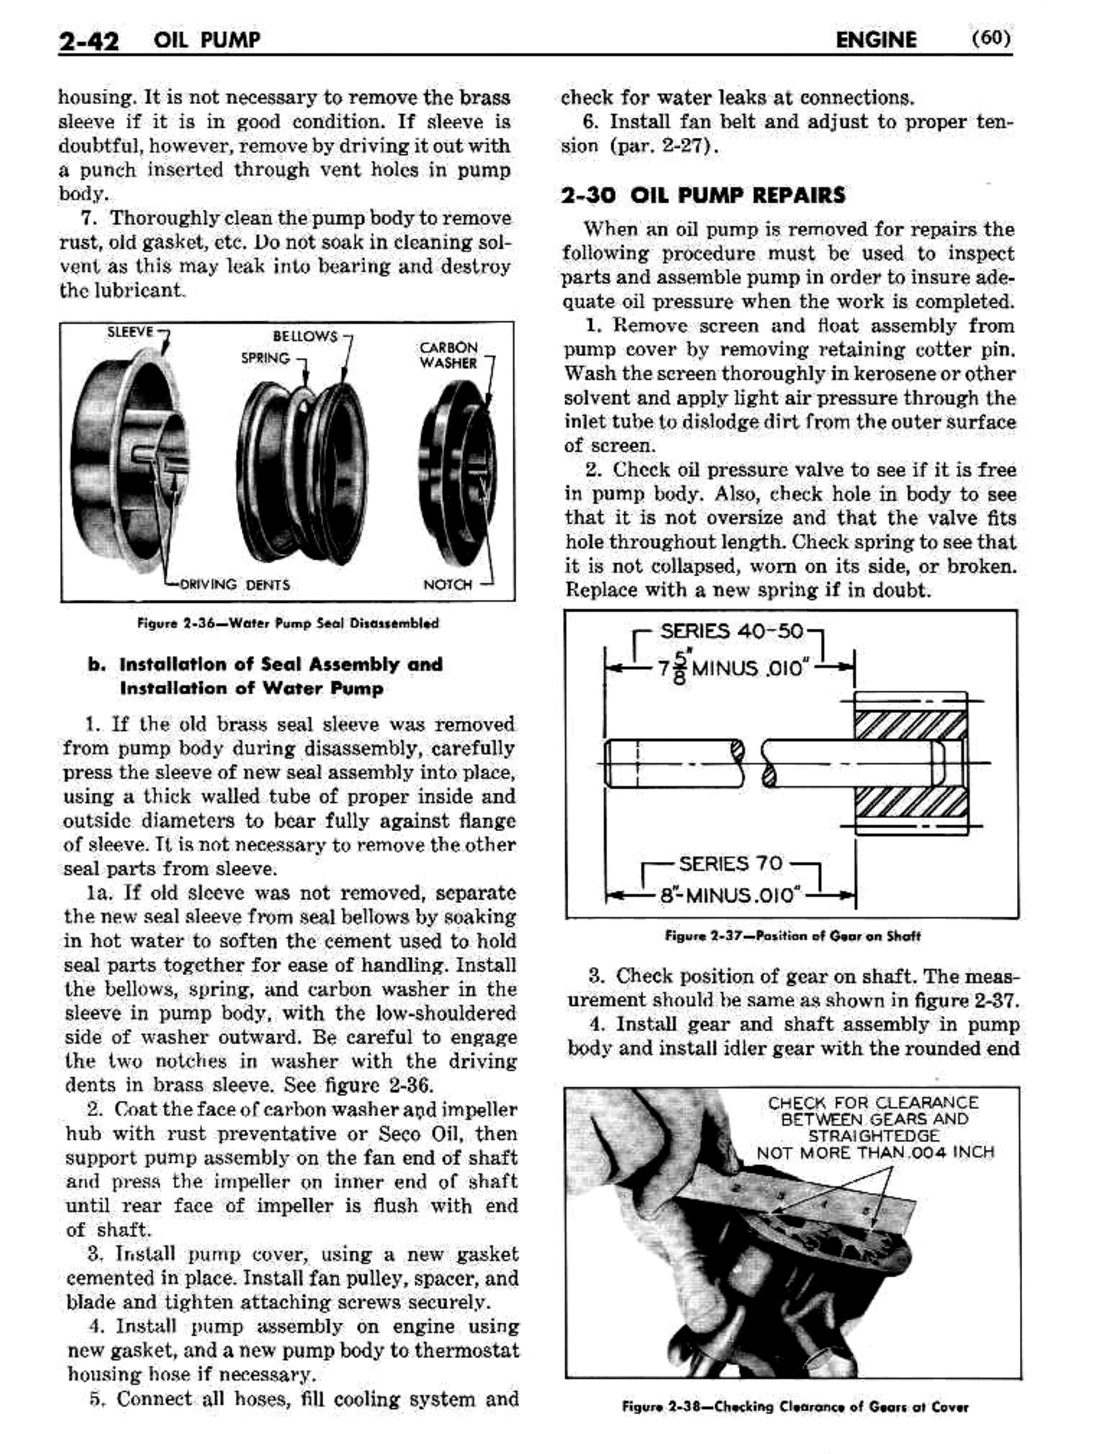 n_03 1951 Buick Shop Manual - Engine-042-042.jpg